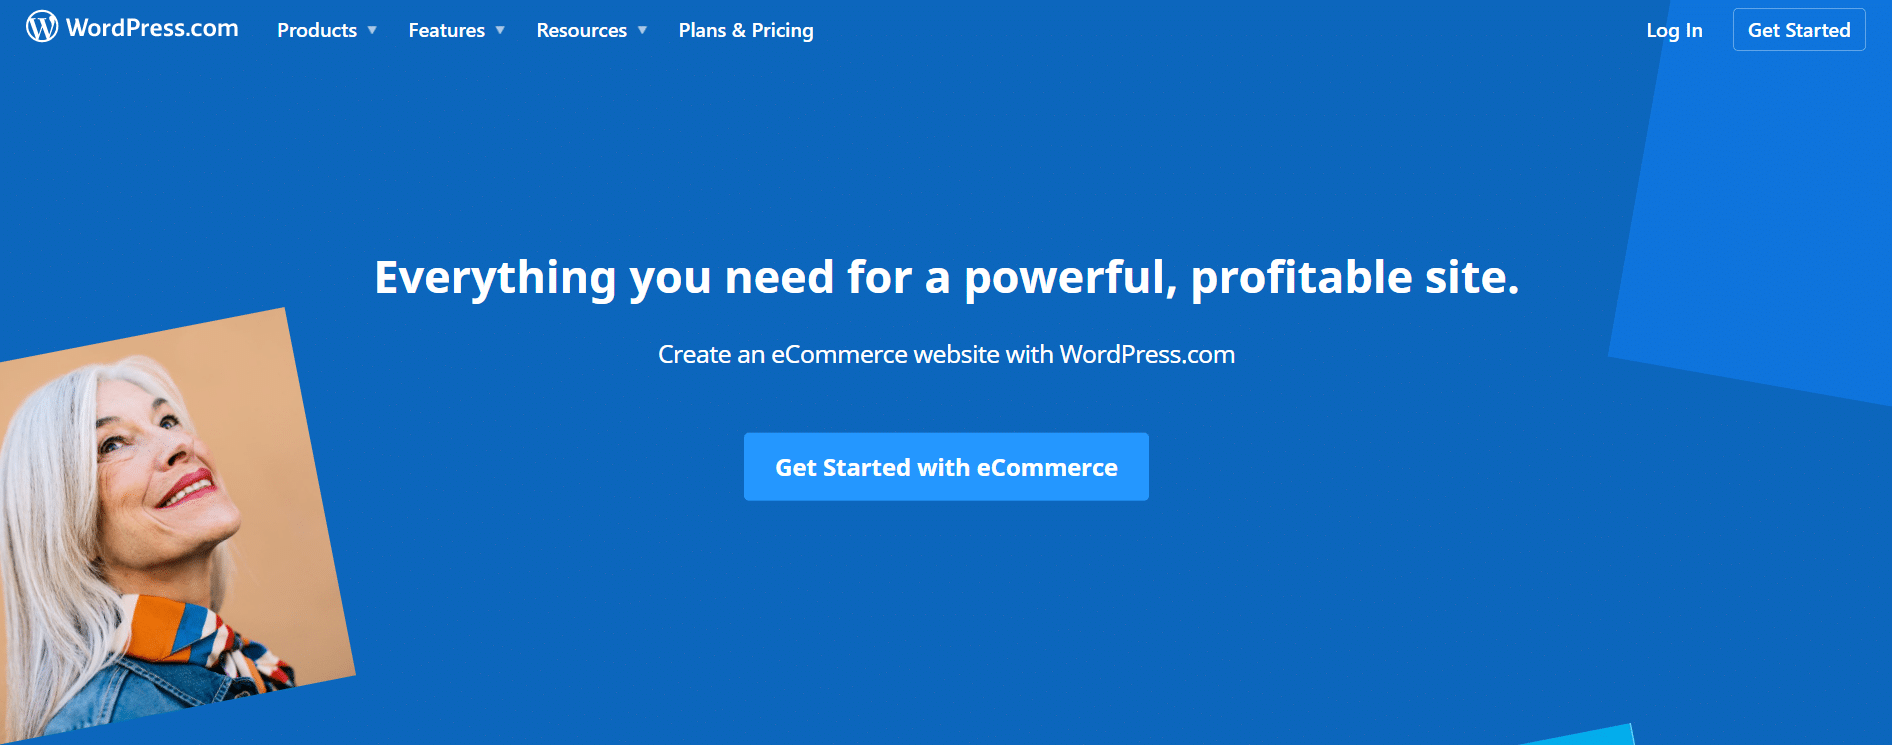 WordPress eCommerce | CyberCrew